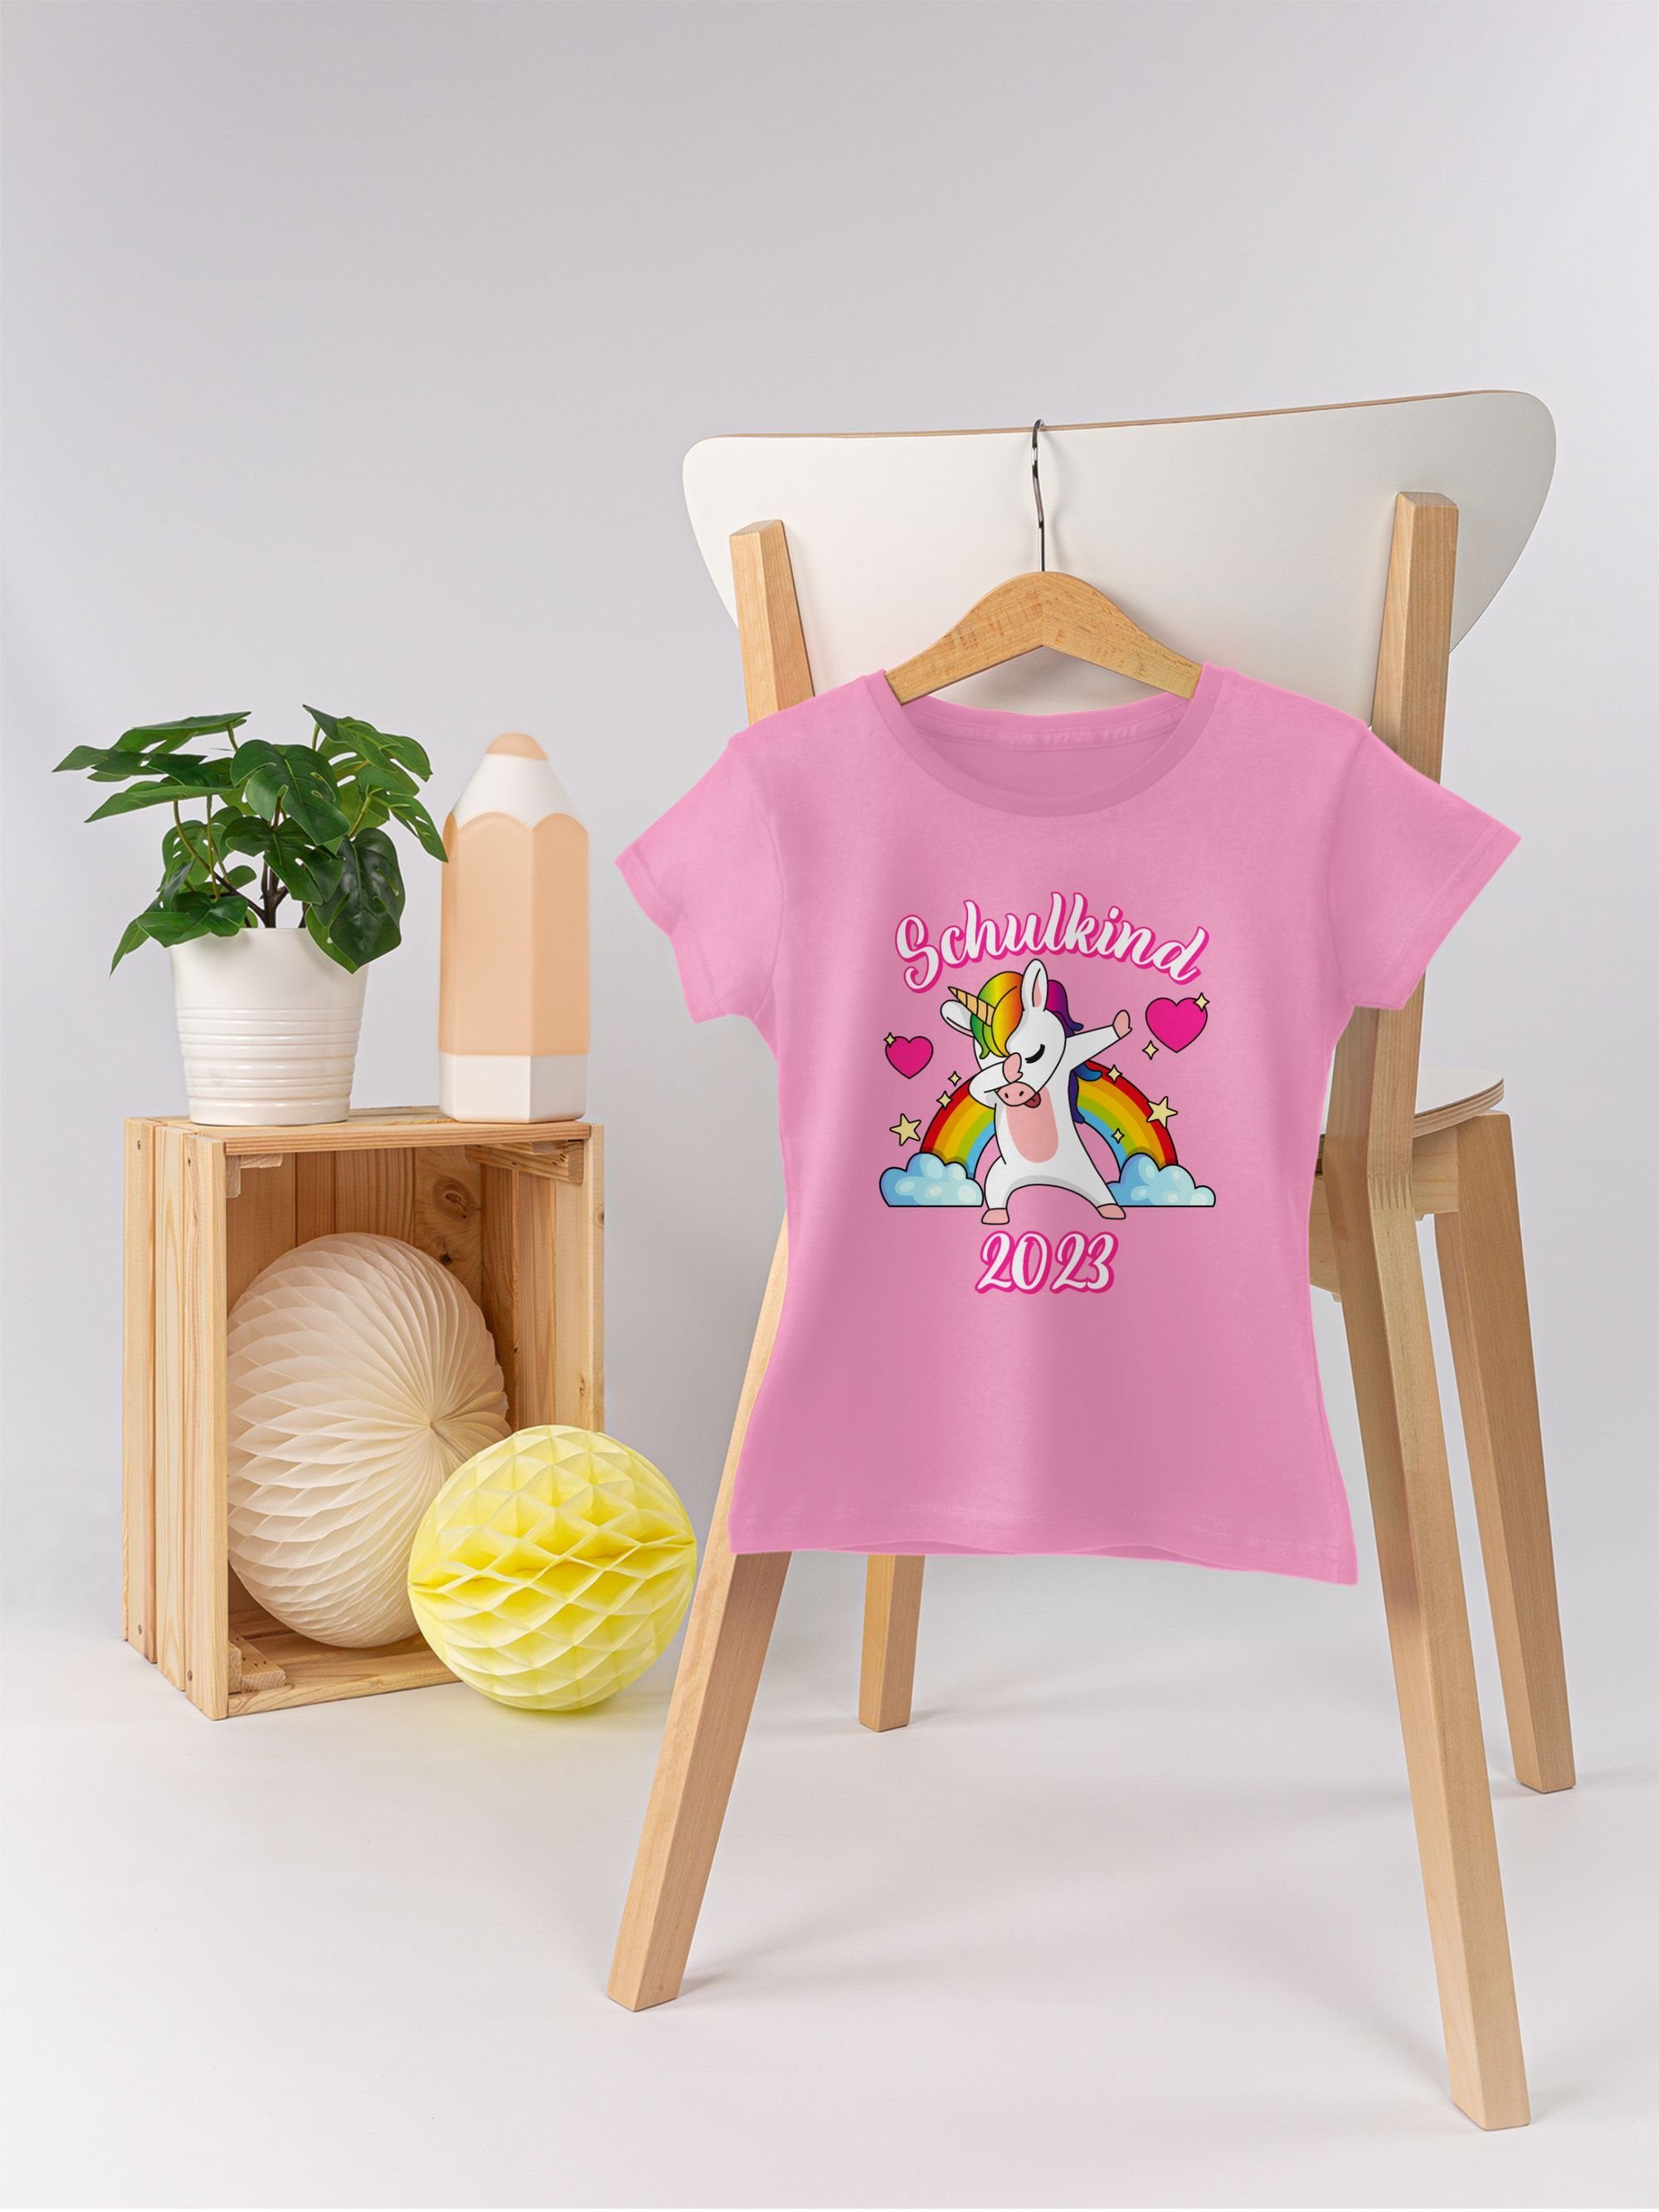 Shirtracer Rosa Schulkind Mädchen T-Shirt Einhorn Einschulung 2023 1 Regenbogen dabbendes